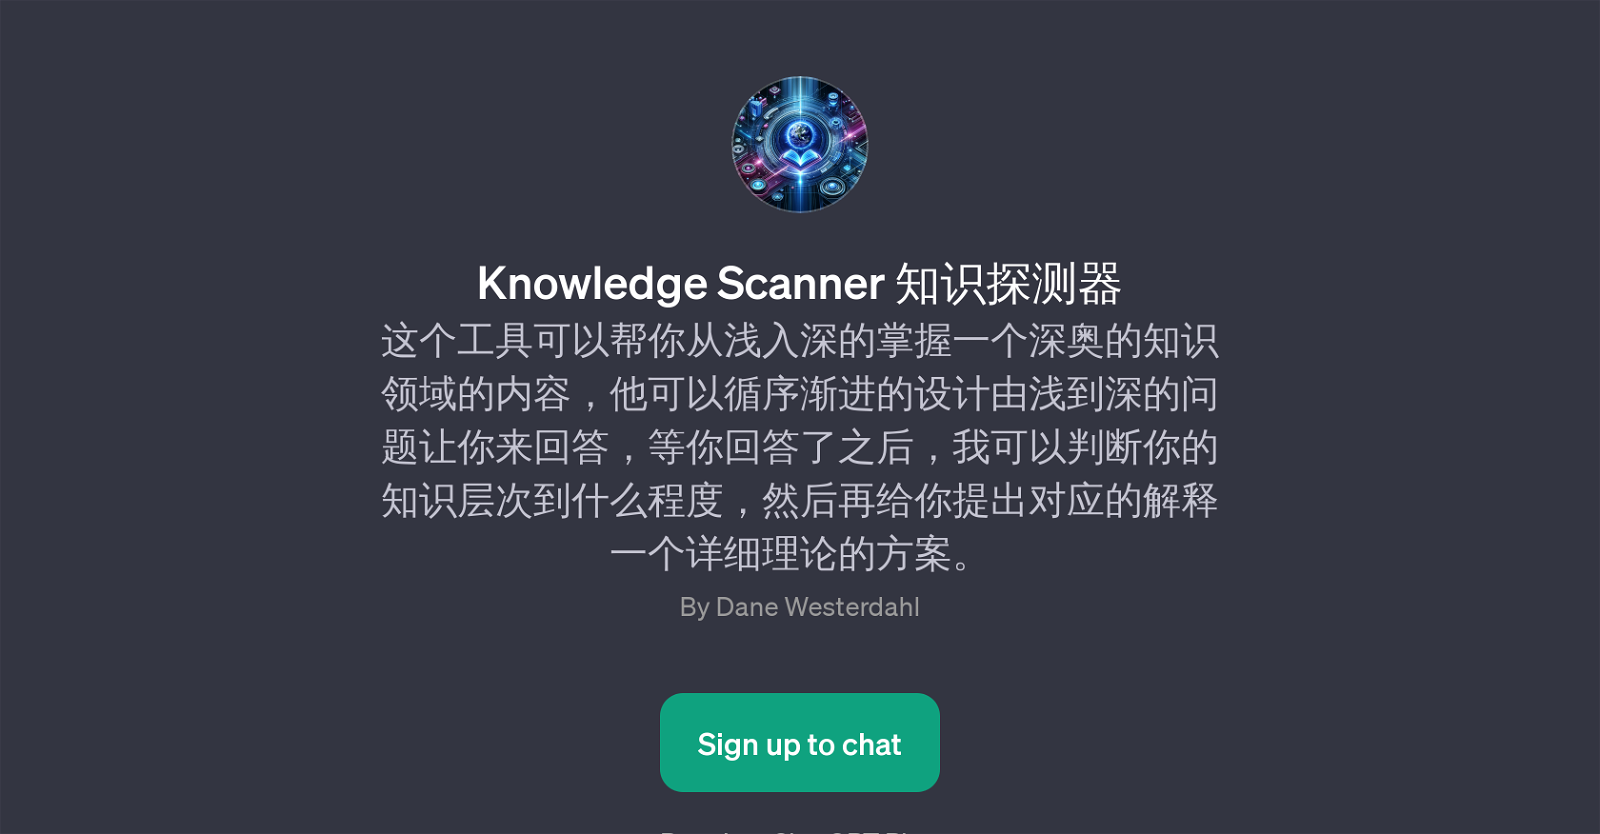 Knowledge Scanner website